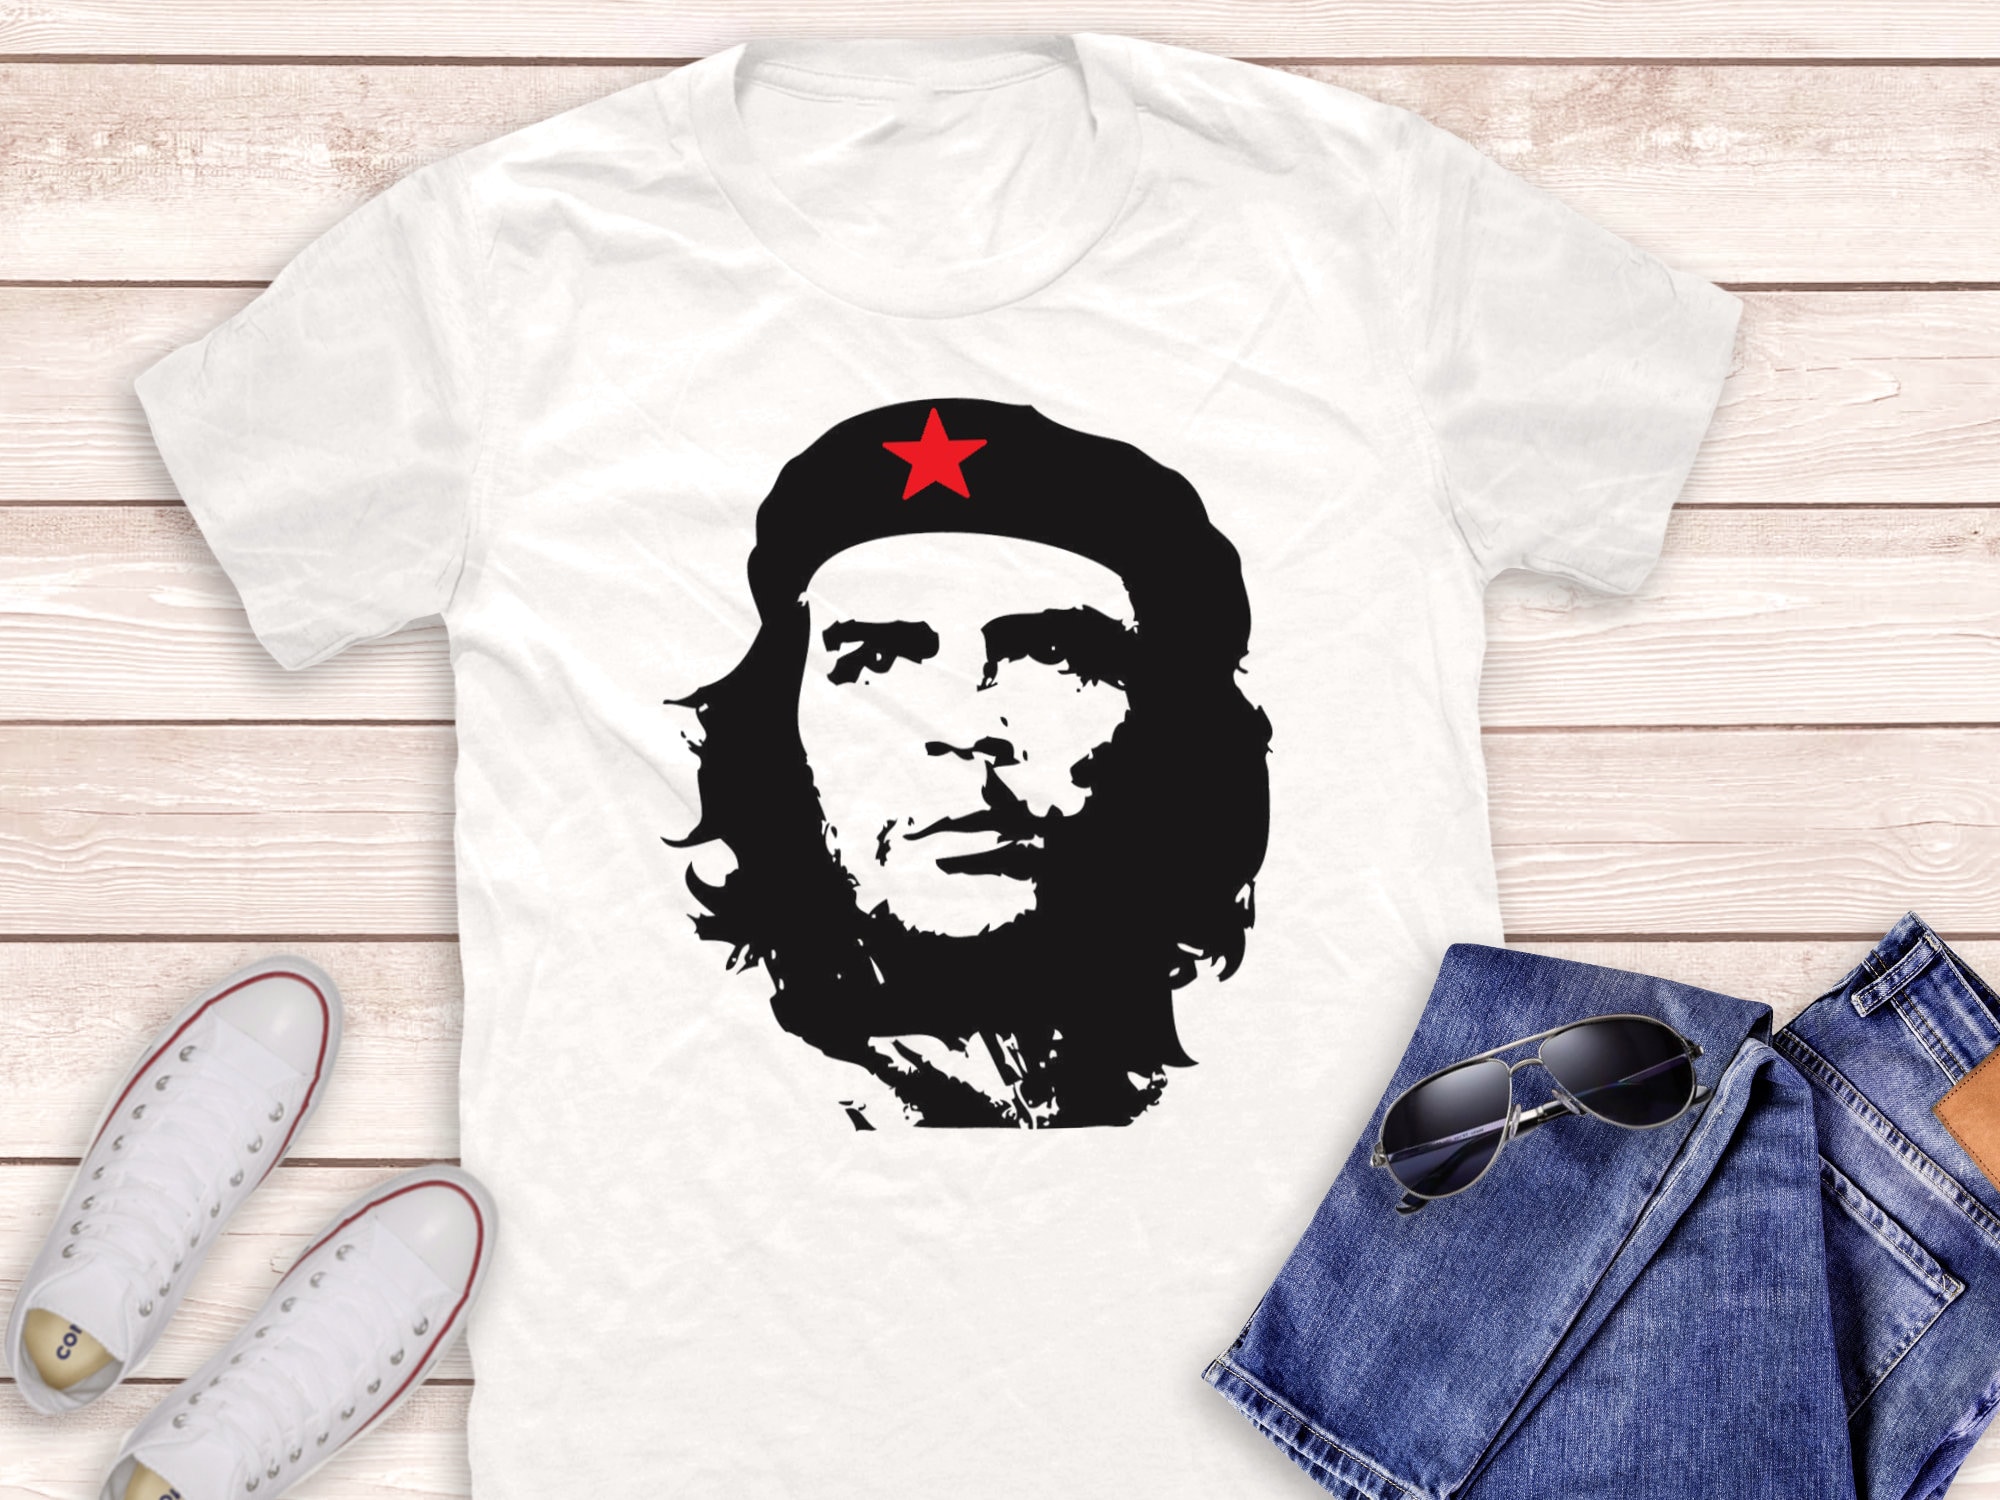 Che Guevara Guerrillero Heroico short-sleeve charcoal grey T-shirt –